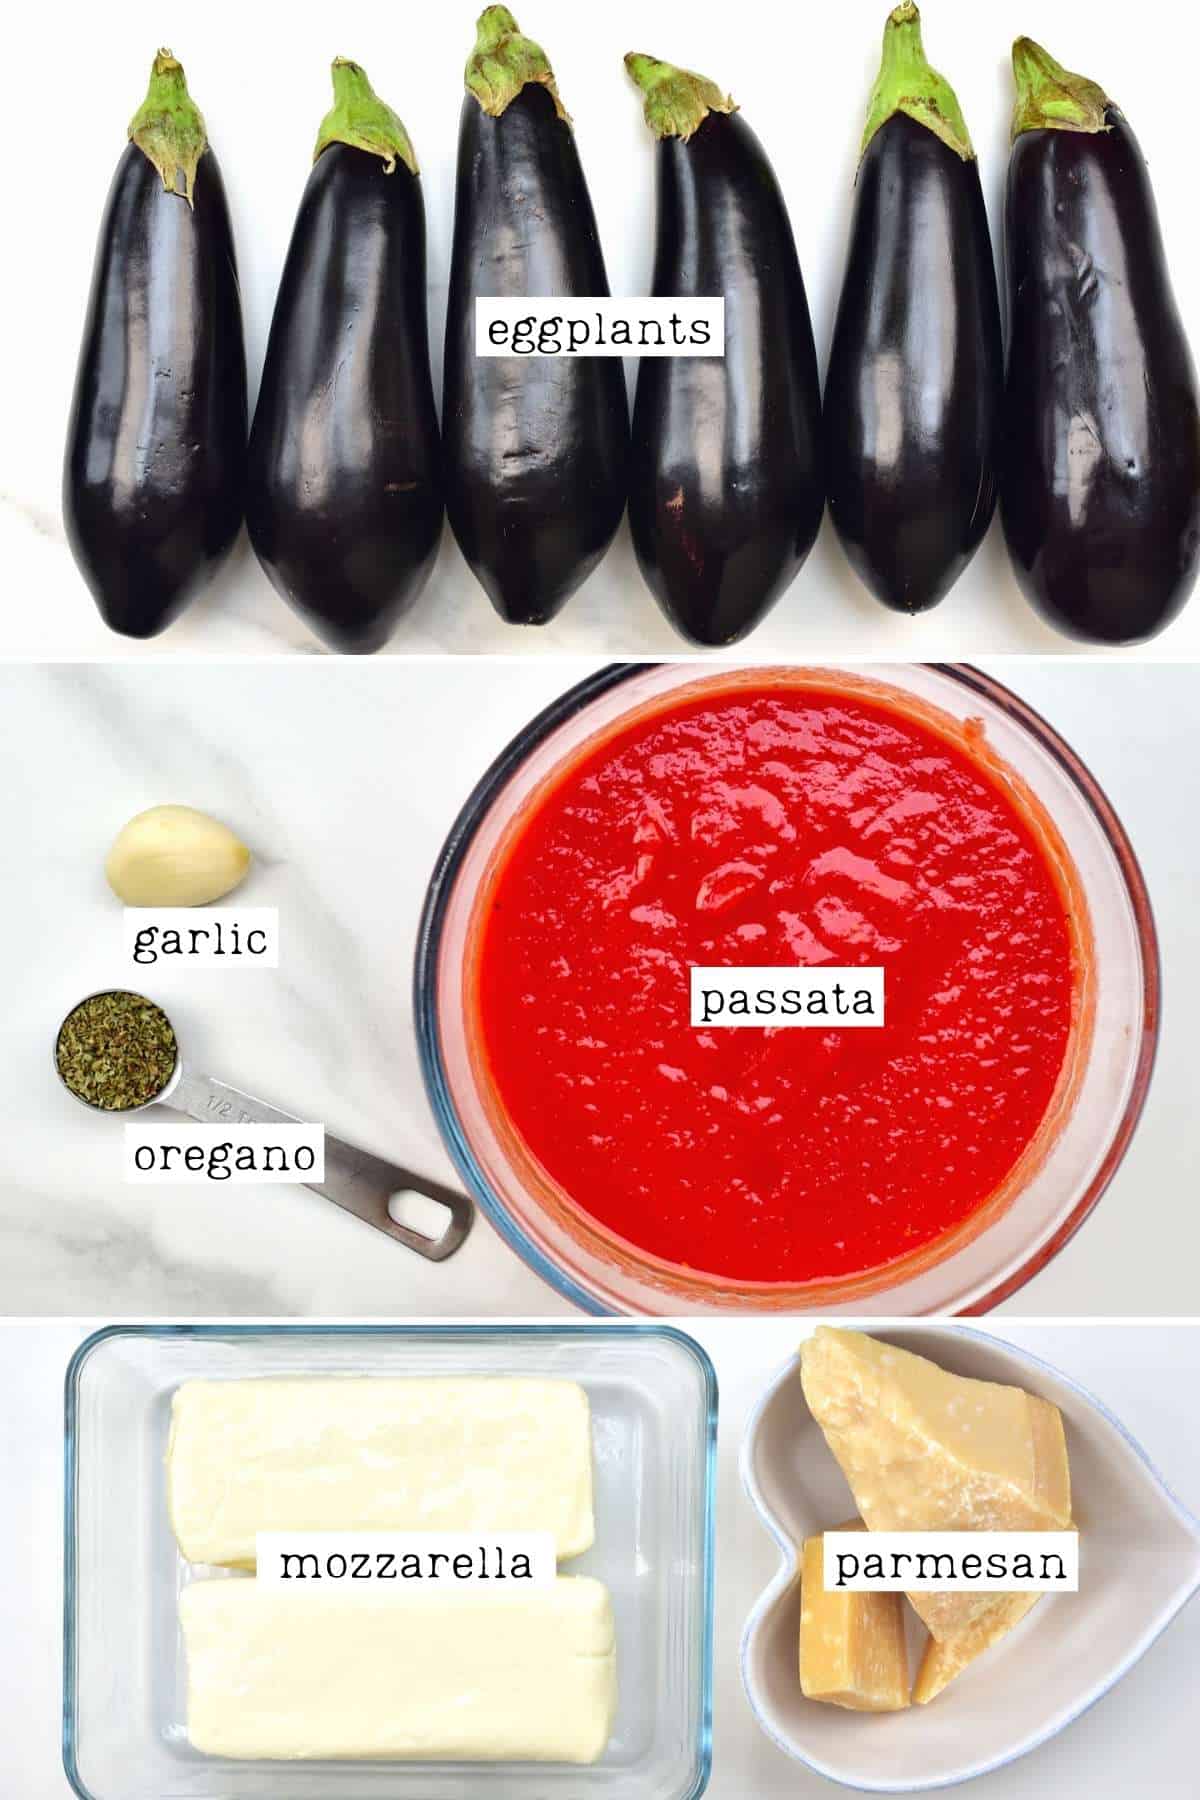 Ingredients for Parmigiana